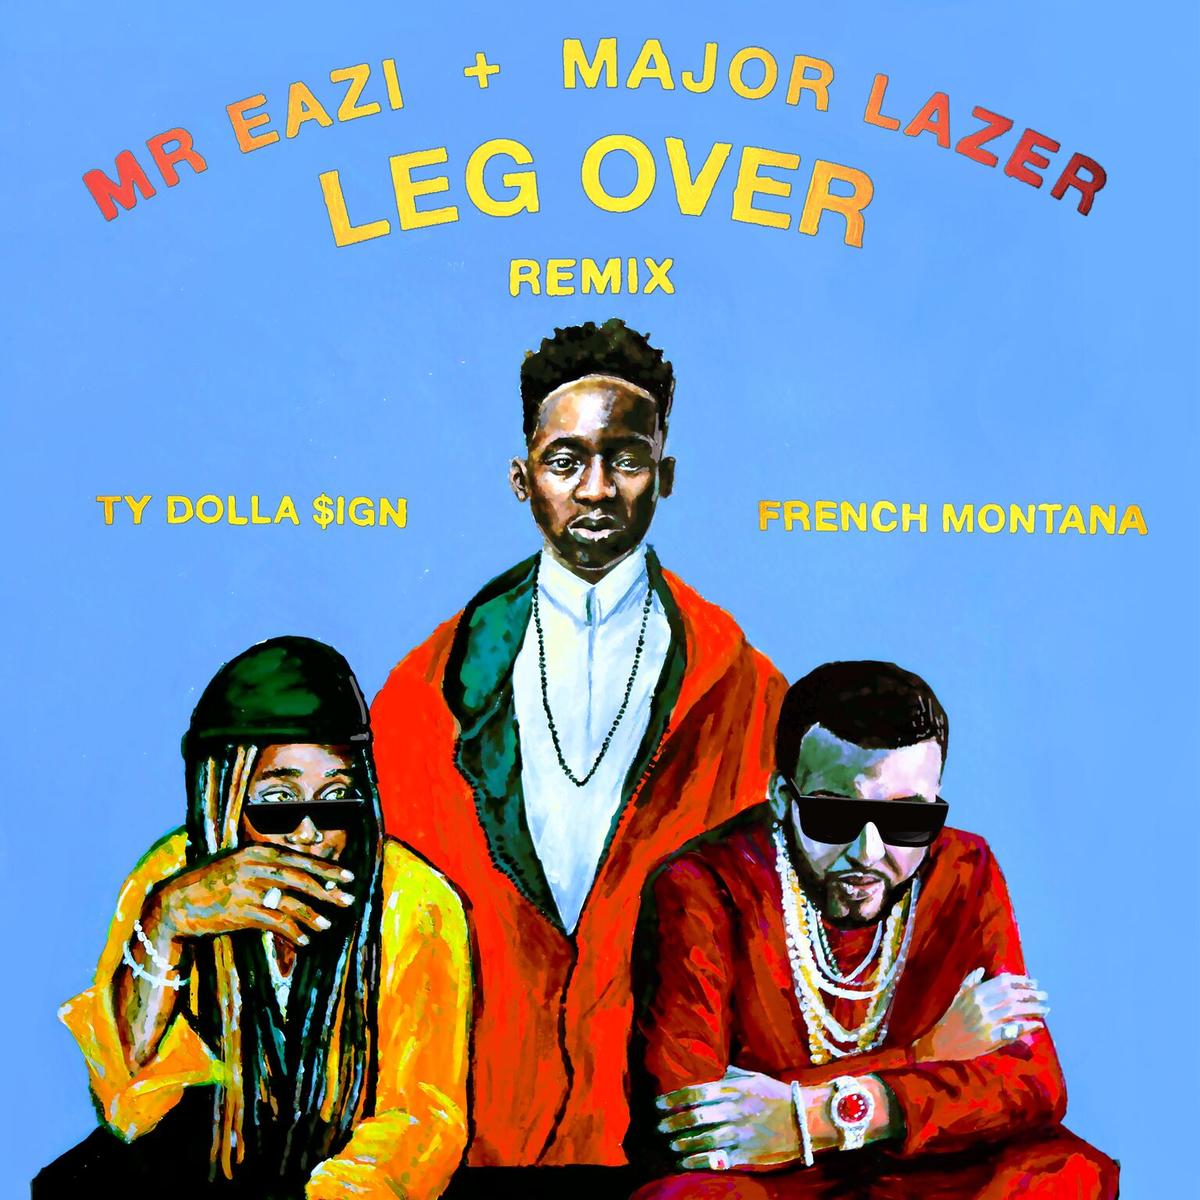 Major Lazer & Mr. Eazi Drop "Leg Over (Remix)" With French Montana & Ty Dolla $ign